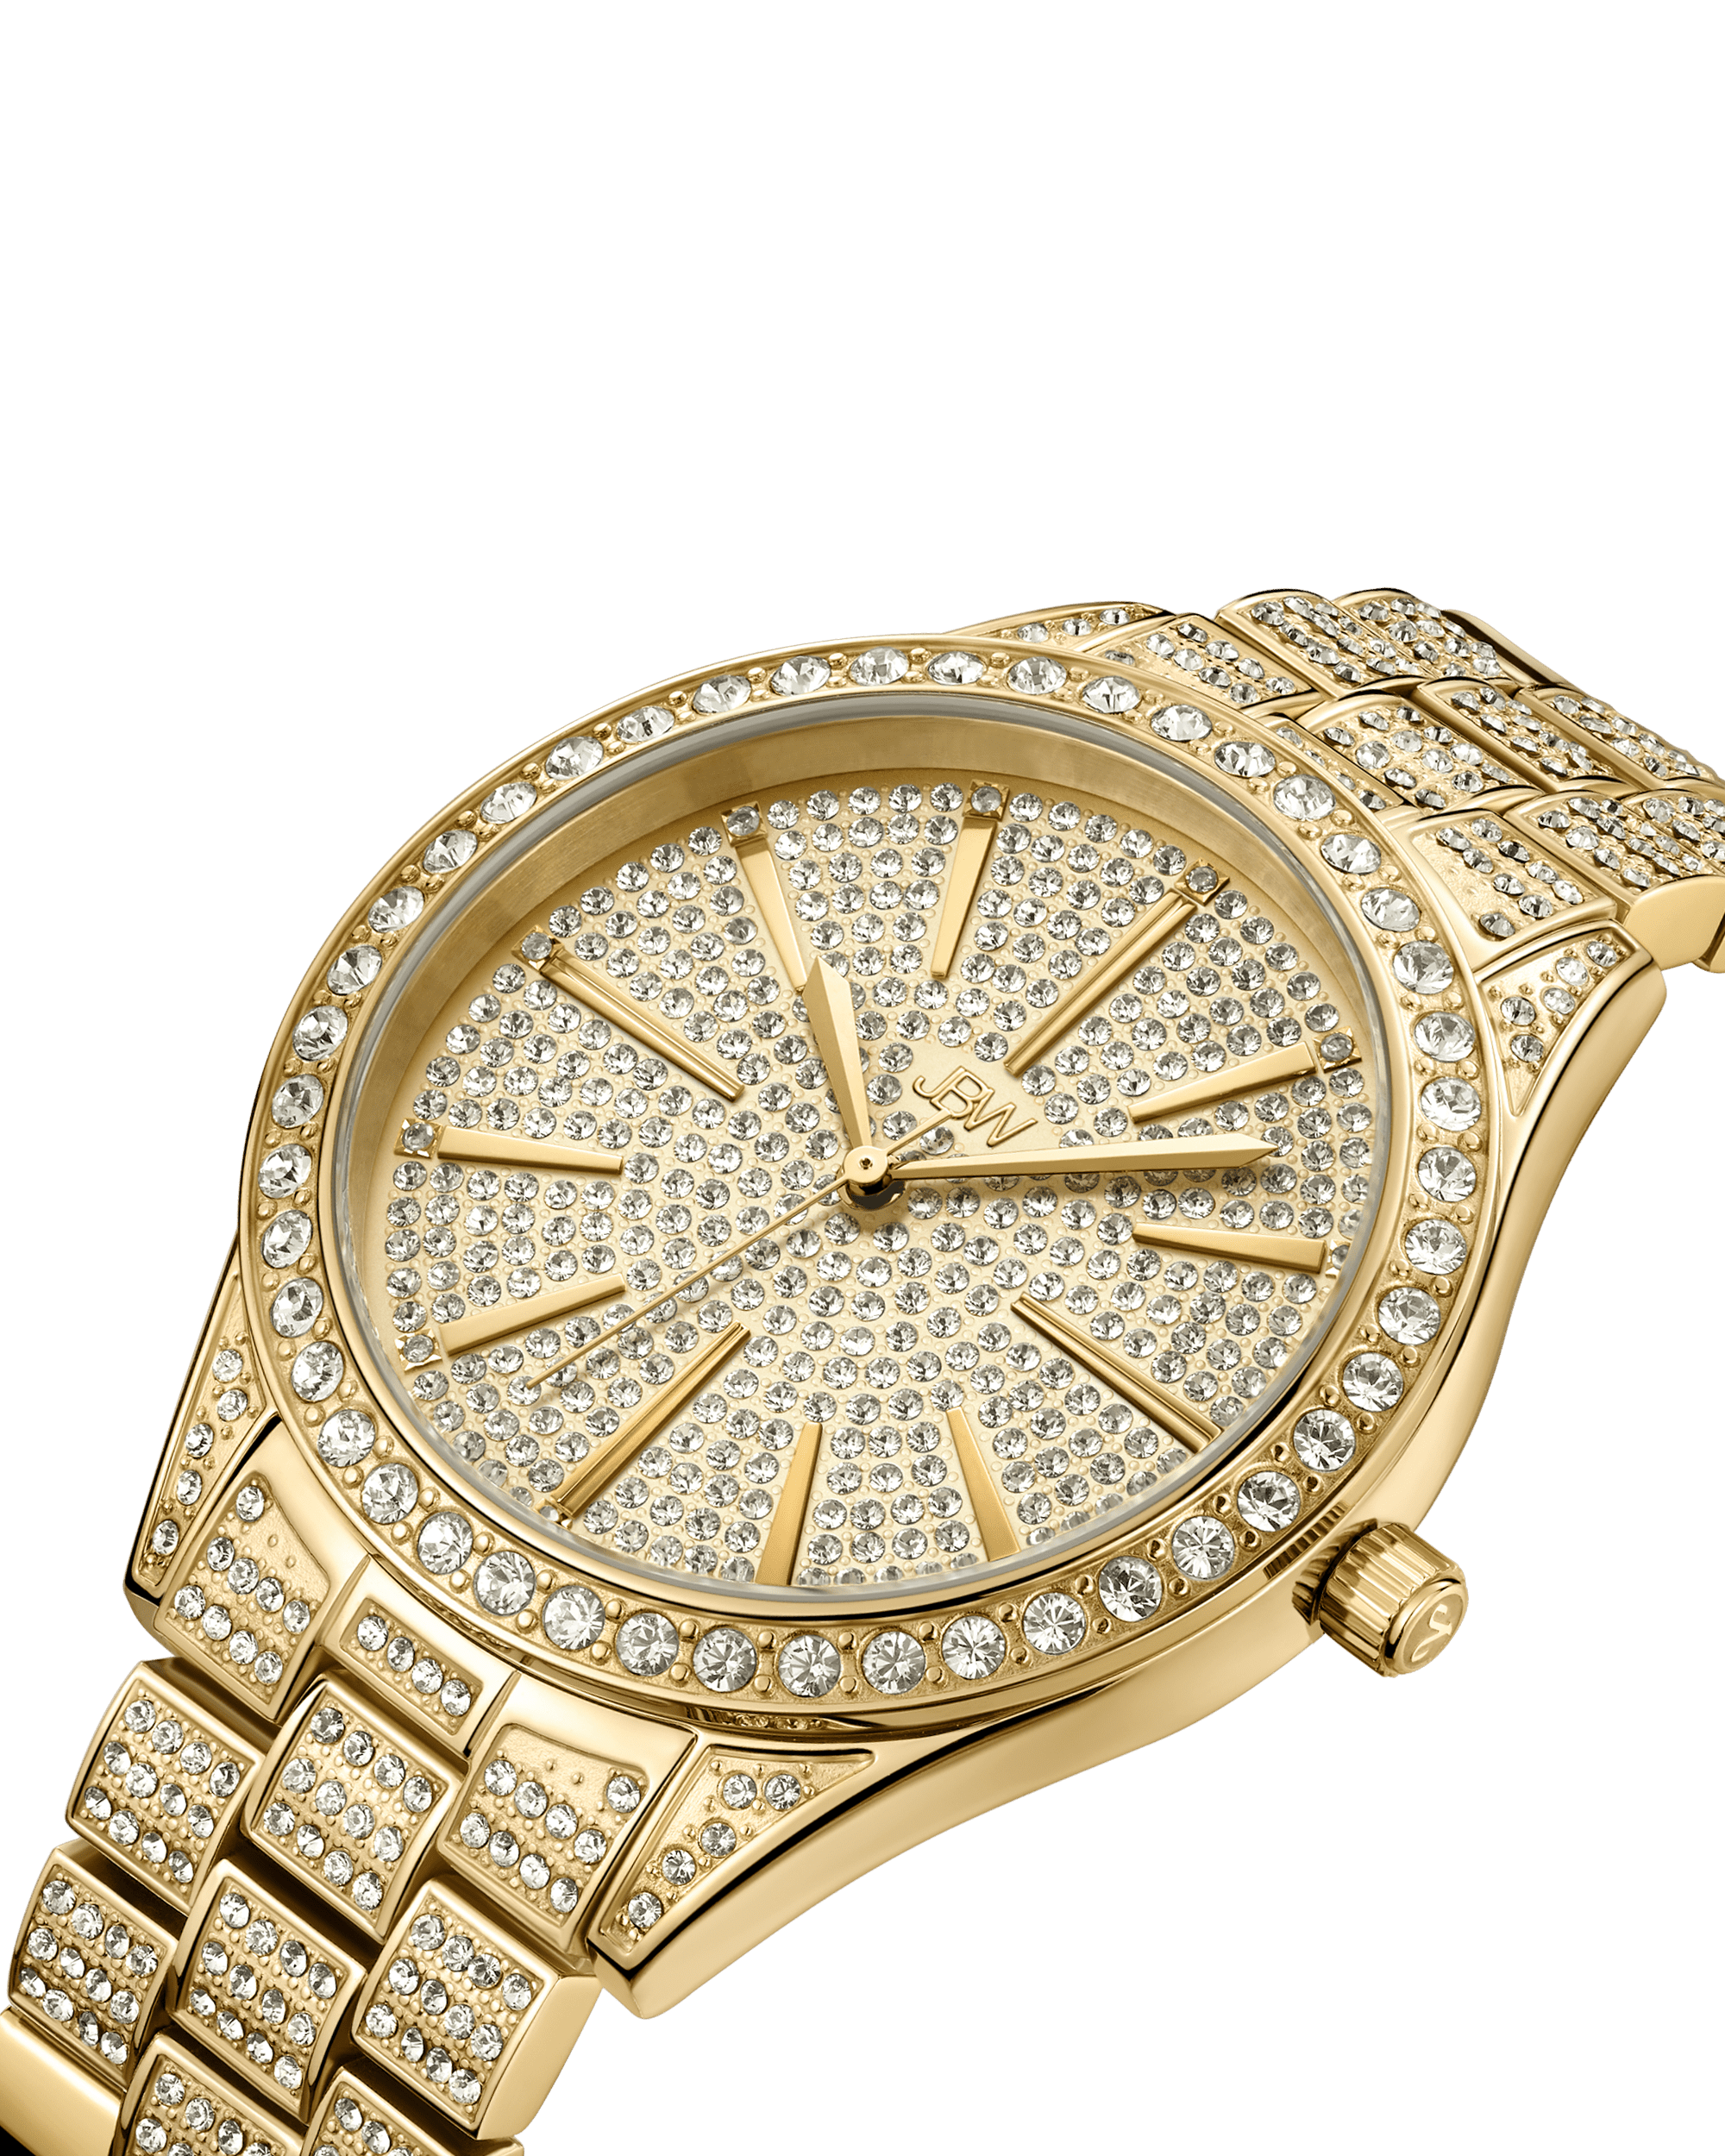 New diamond design lite weighted watch for men/boys